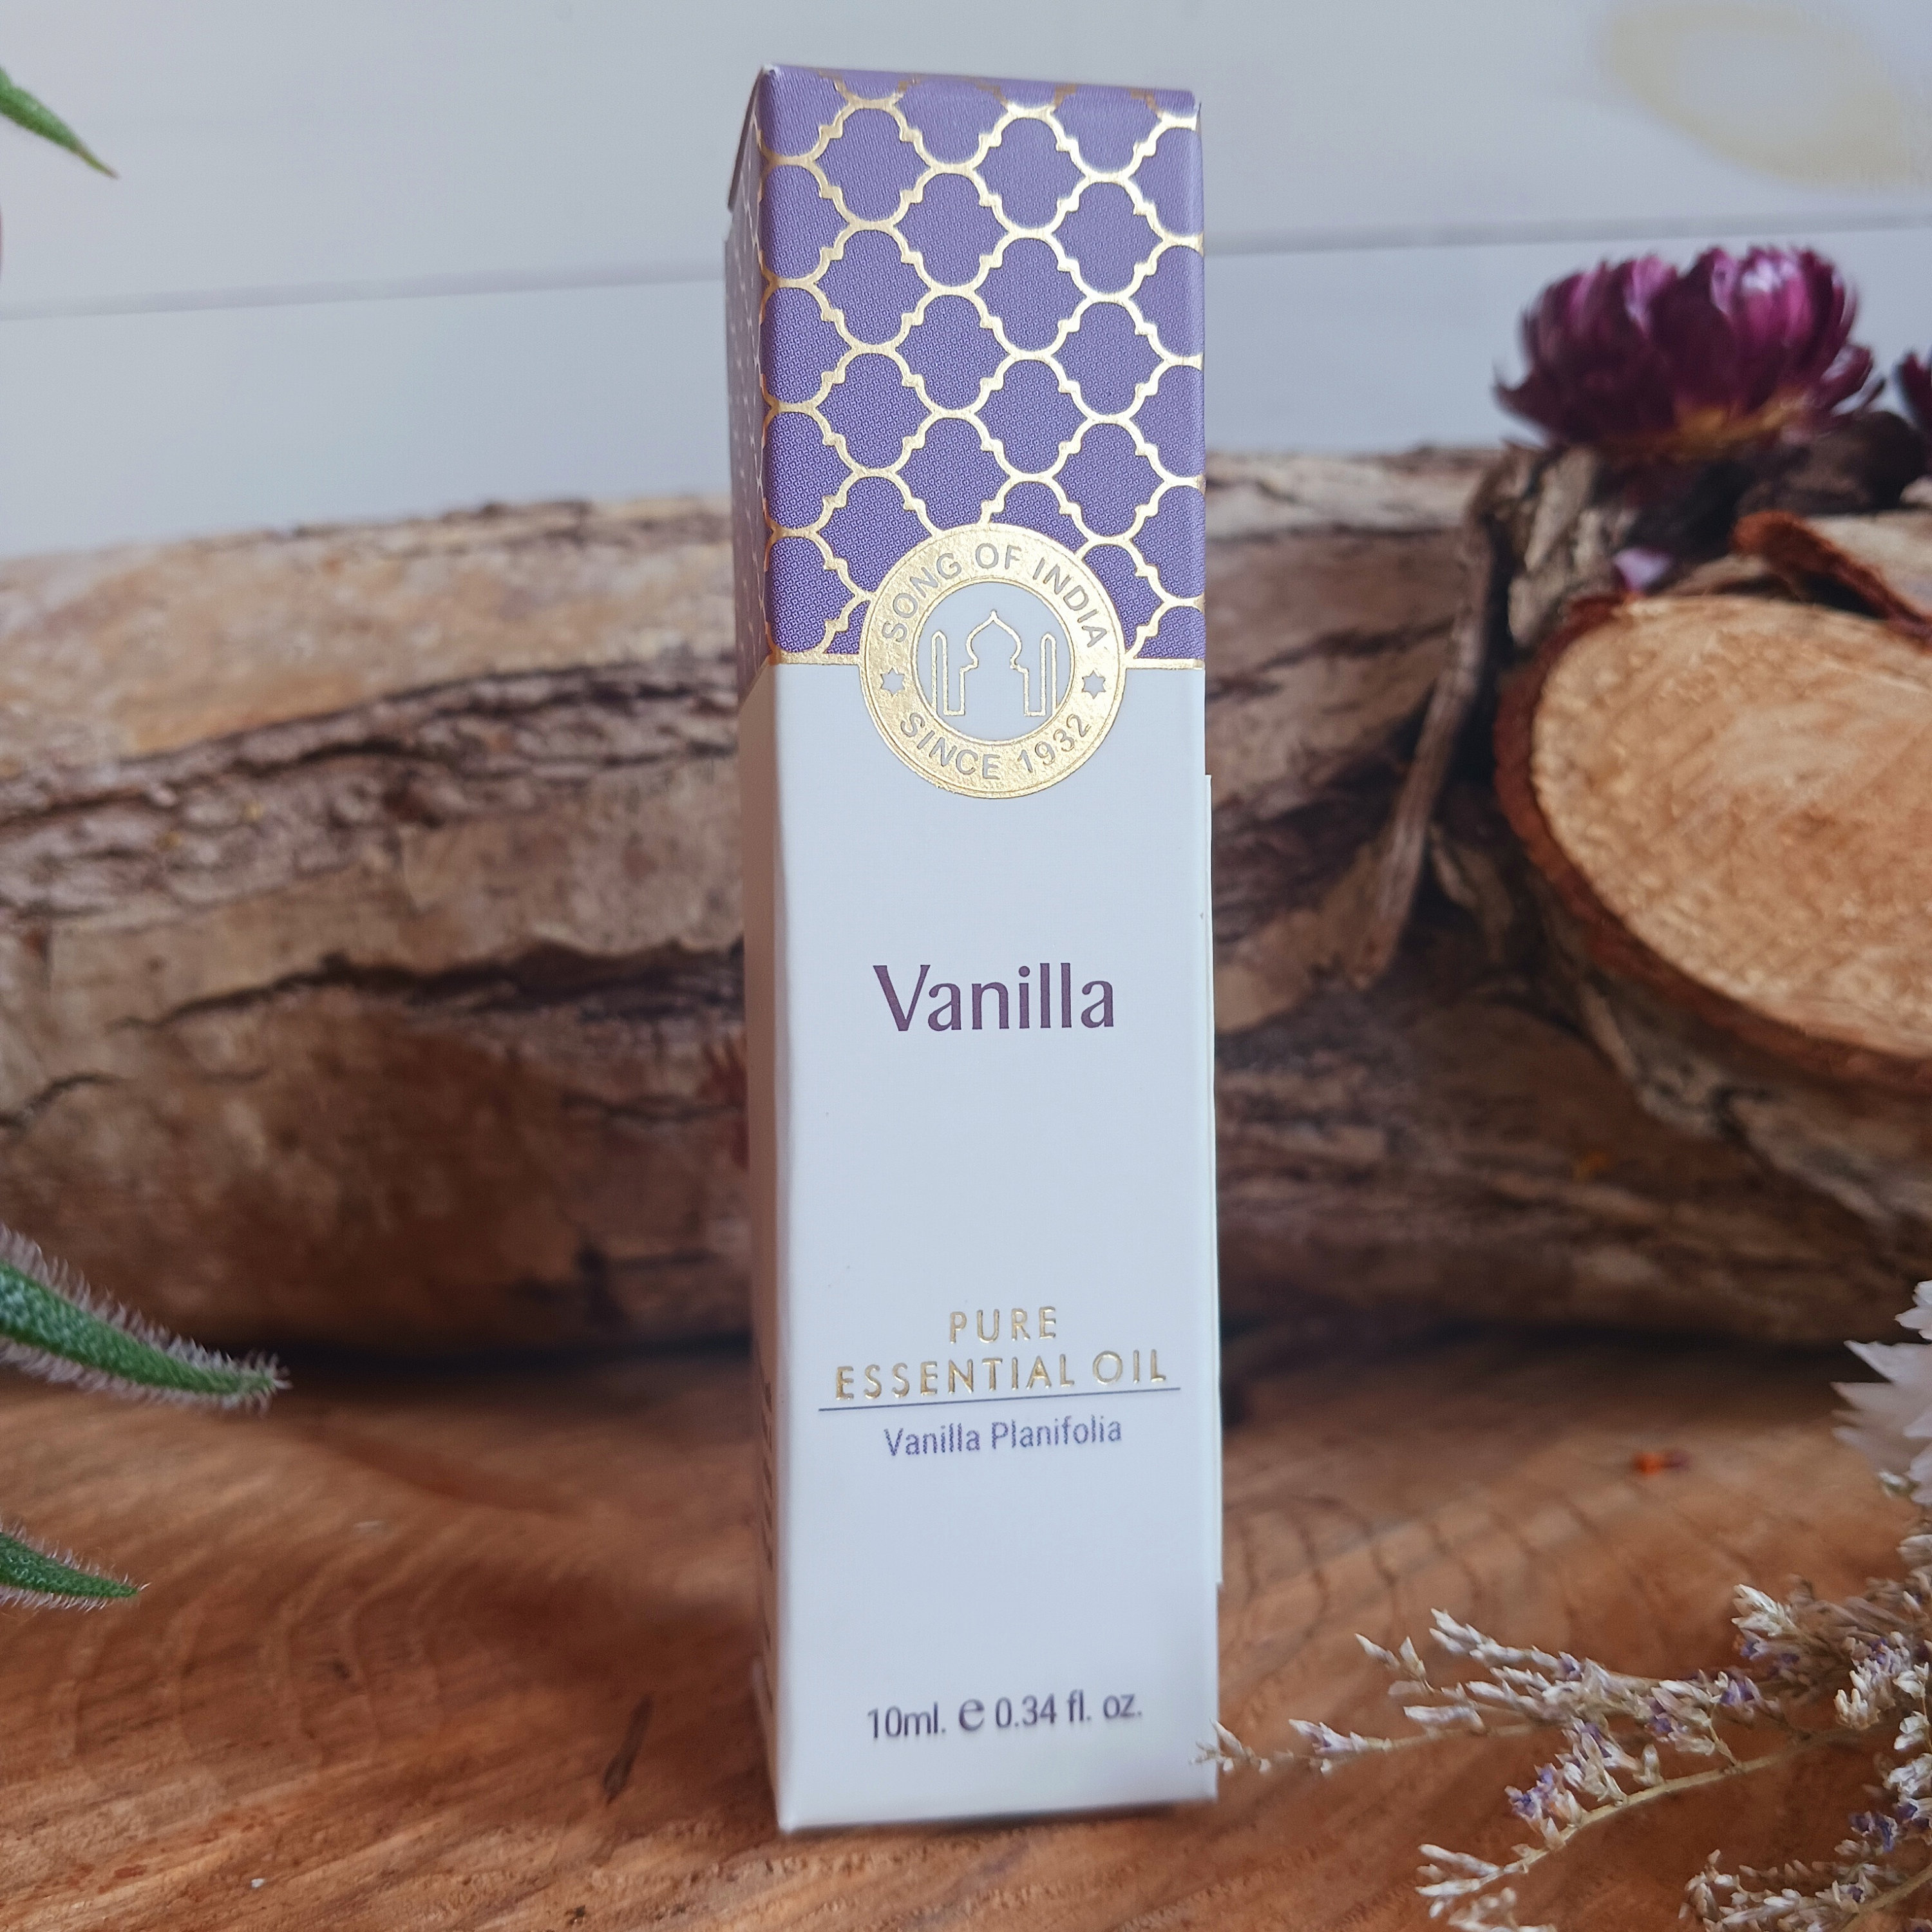 MAYJAM Pure Vanilla Essential Oil for Skin & Diffuser (100ml) - Therapeutic Grade Oleoresin Essential Oils Vanilla Oil - Fragrant and Long Lasting